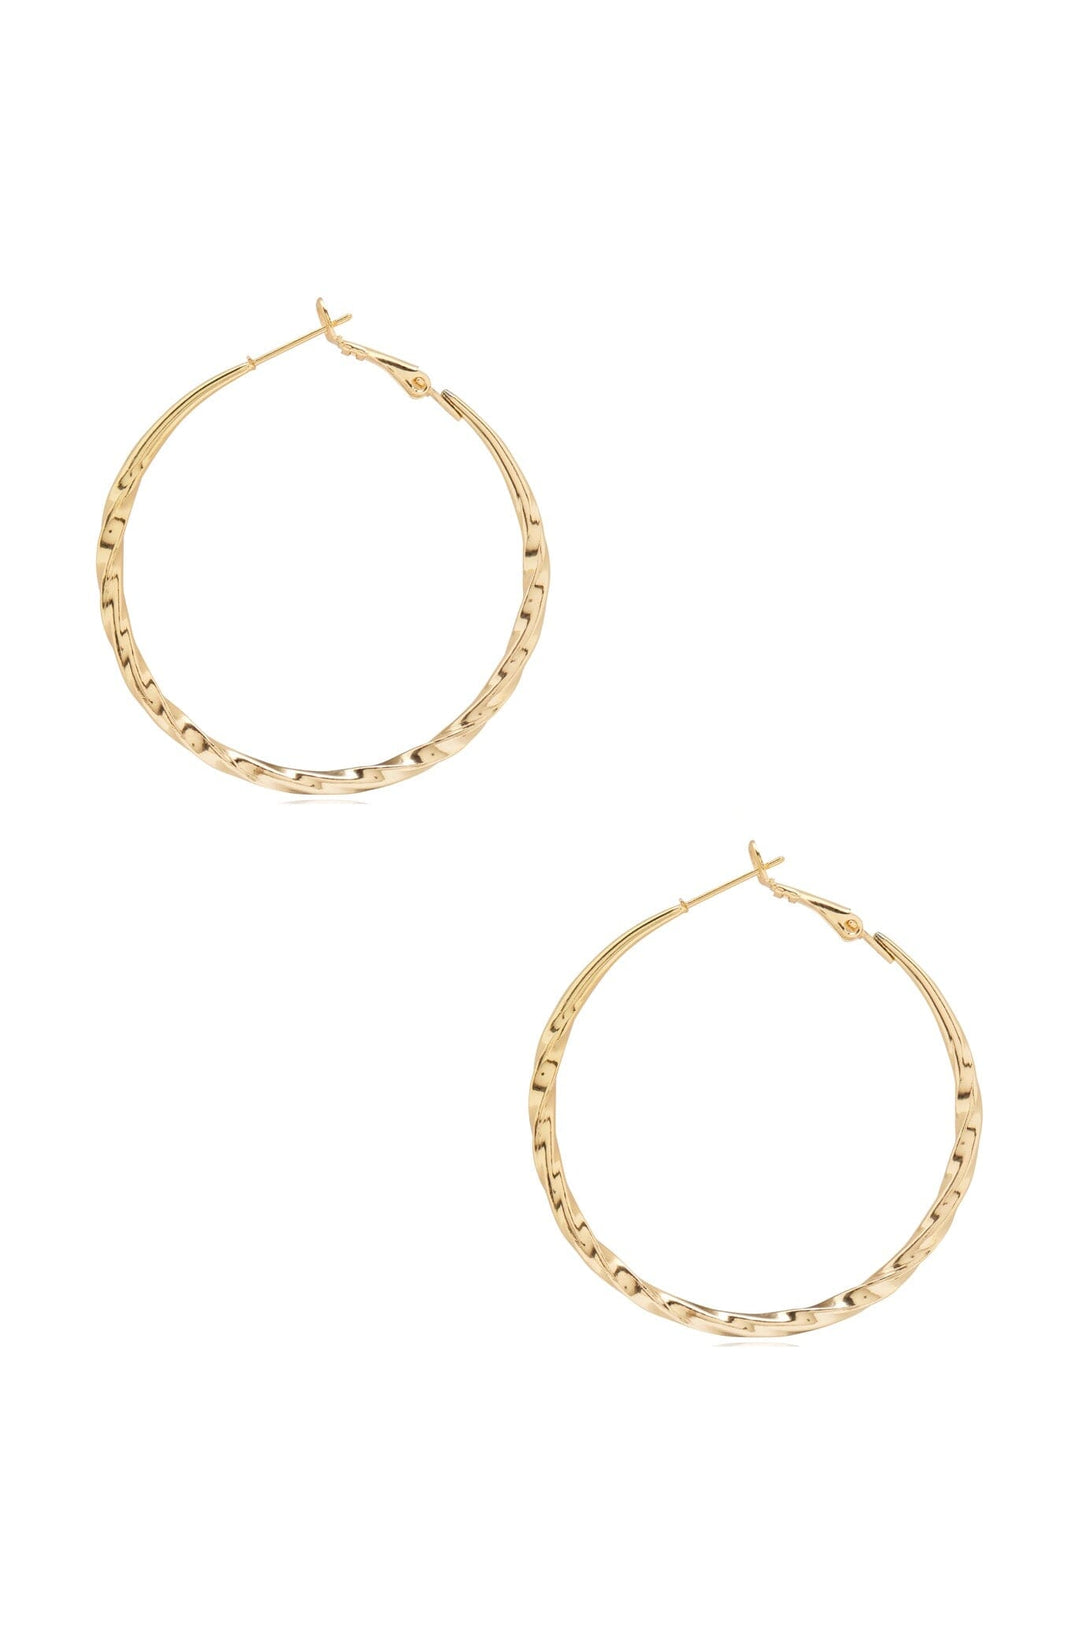 Ursula Earrings Gold Earrings